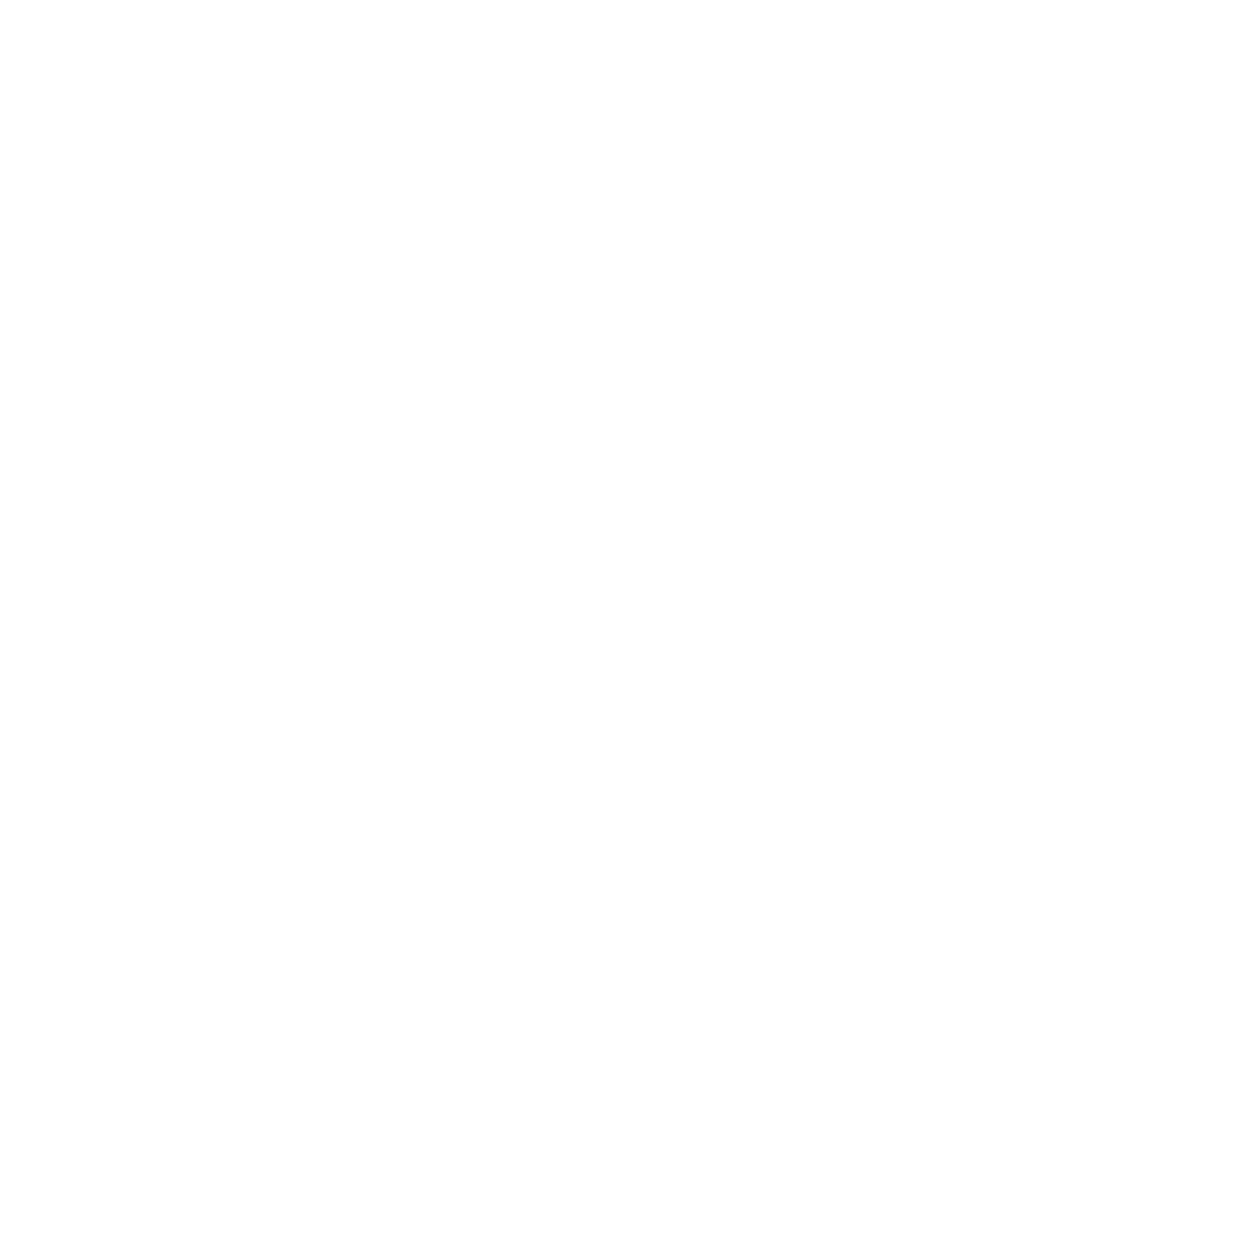 Logo Almaviva